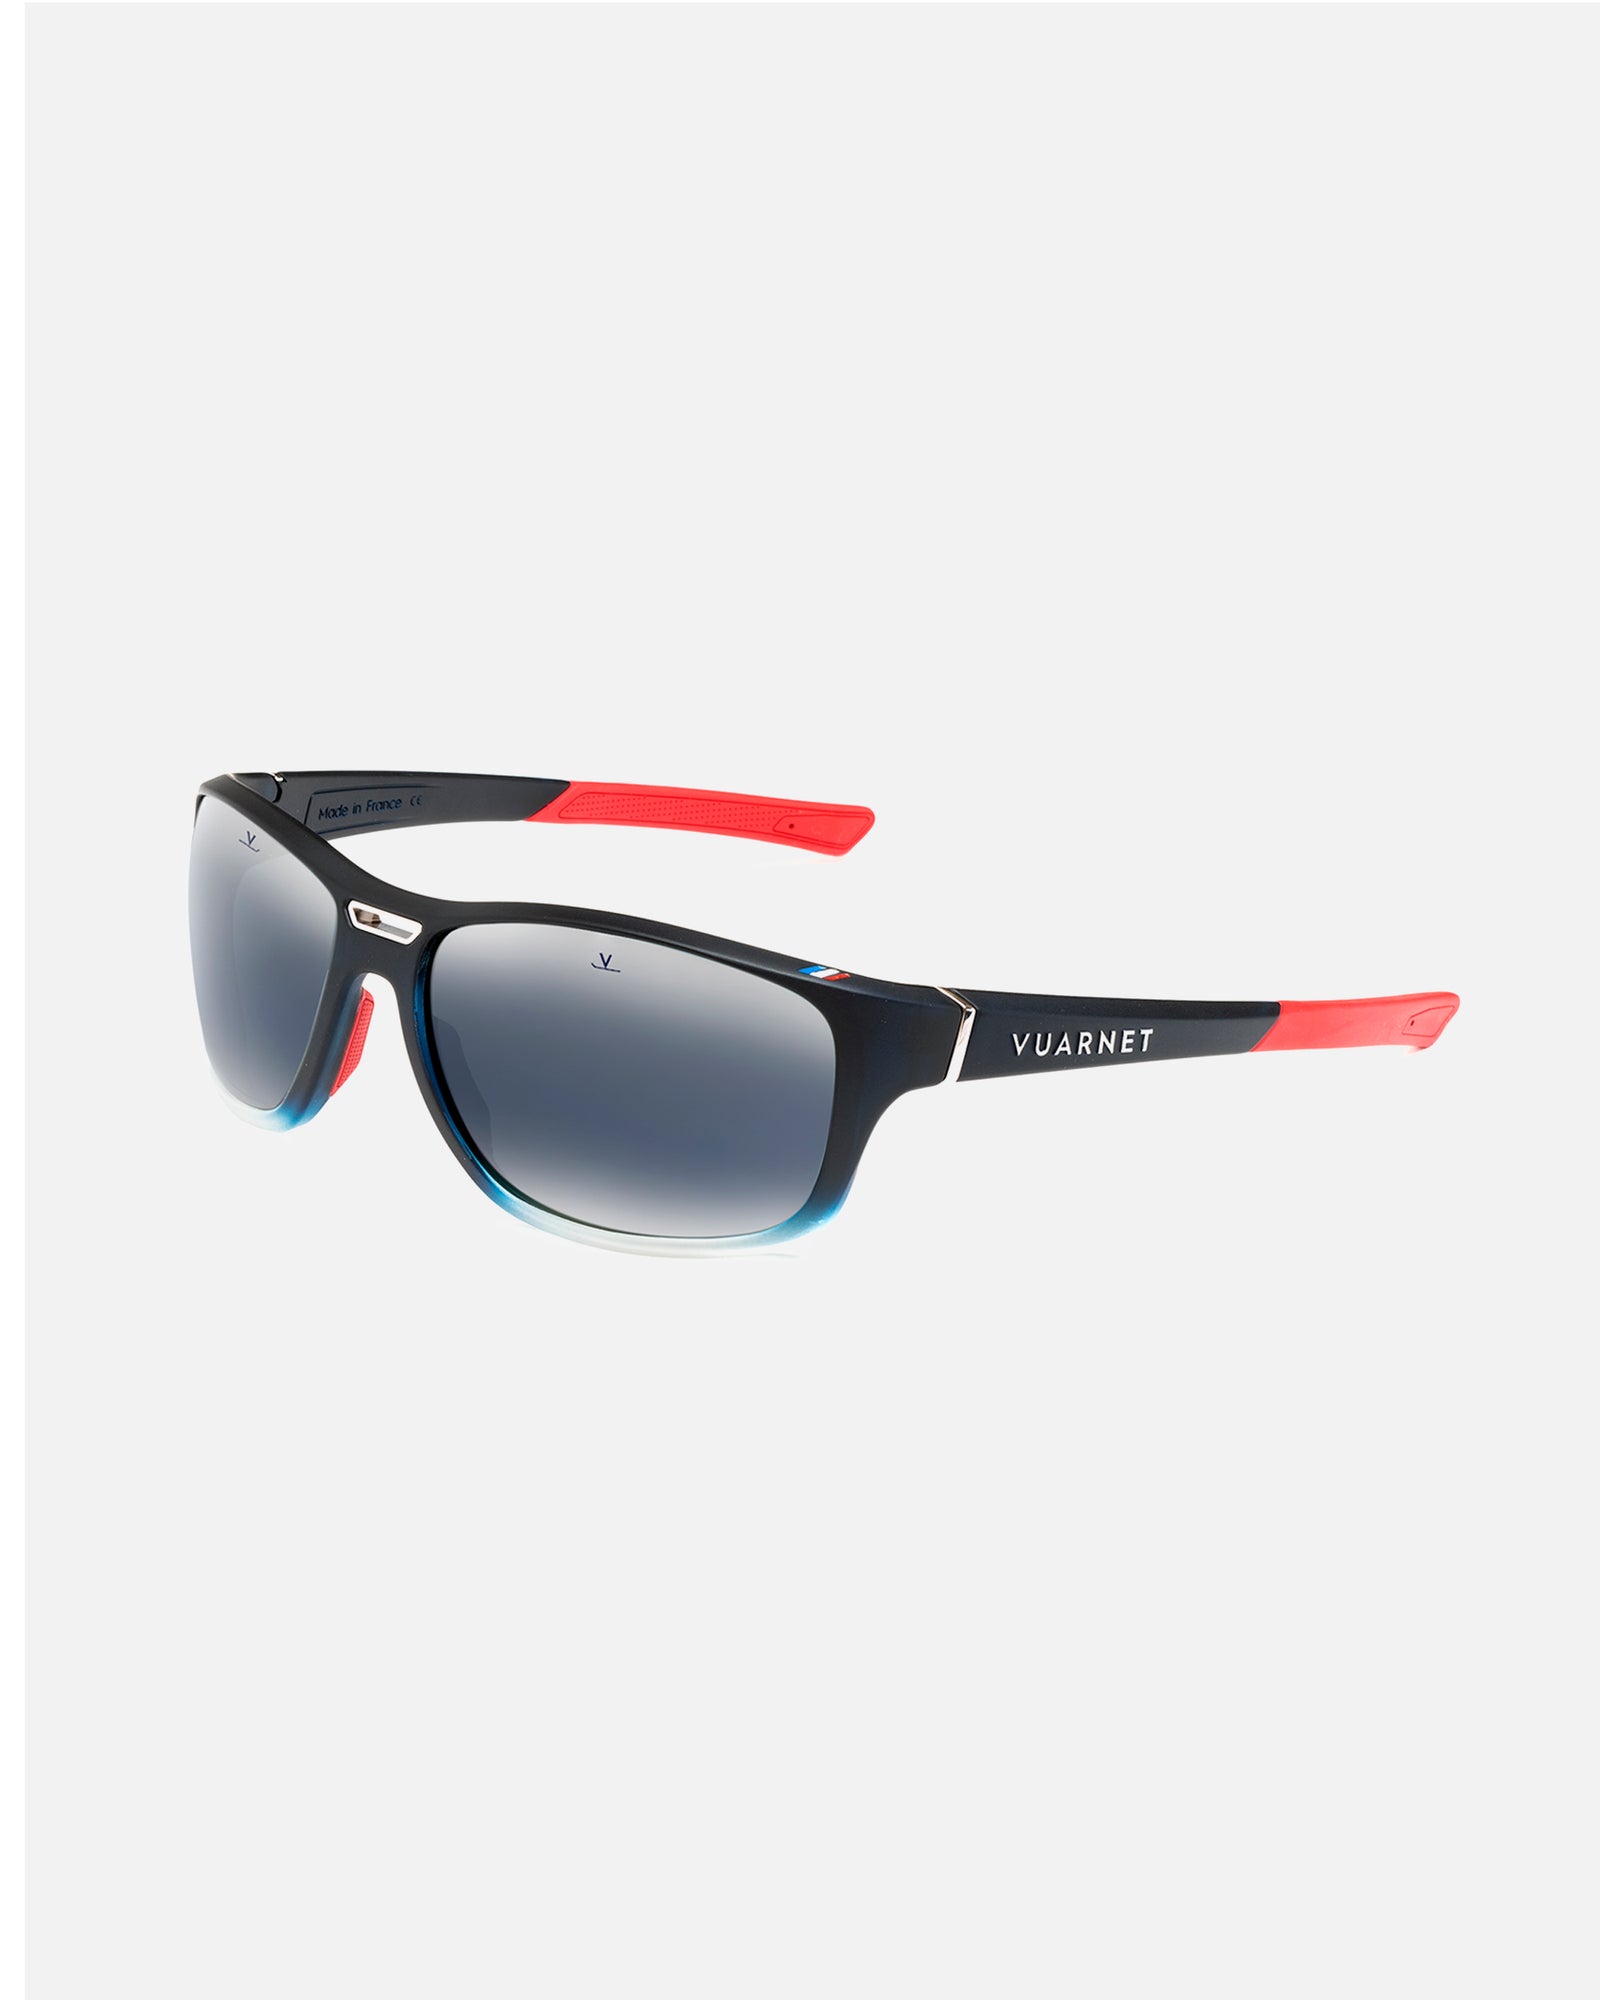 High-elevation sunglasses sports running